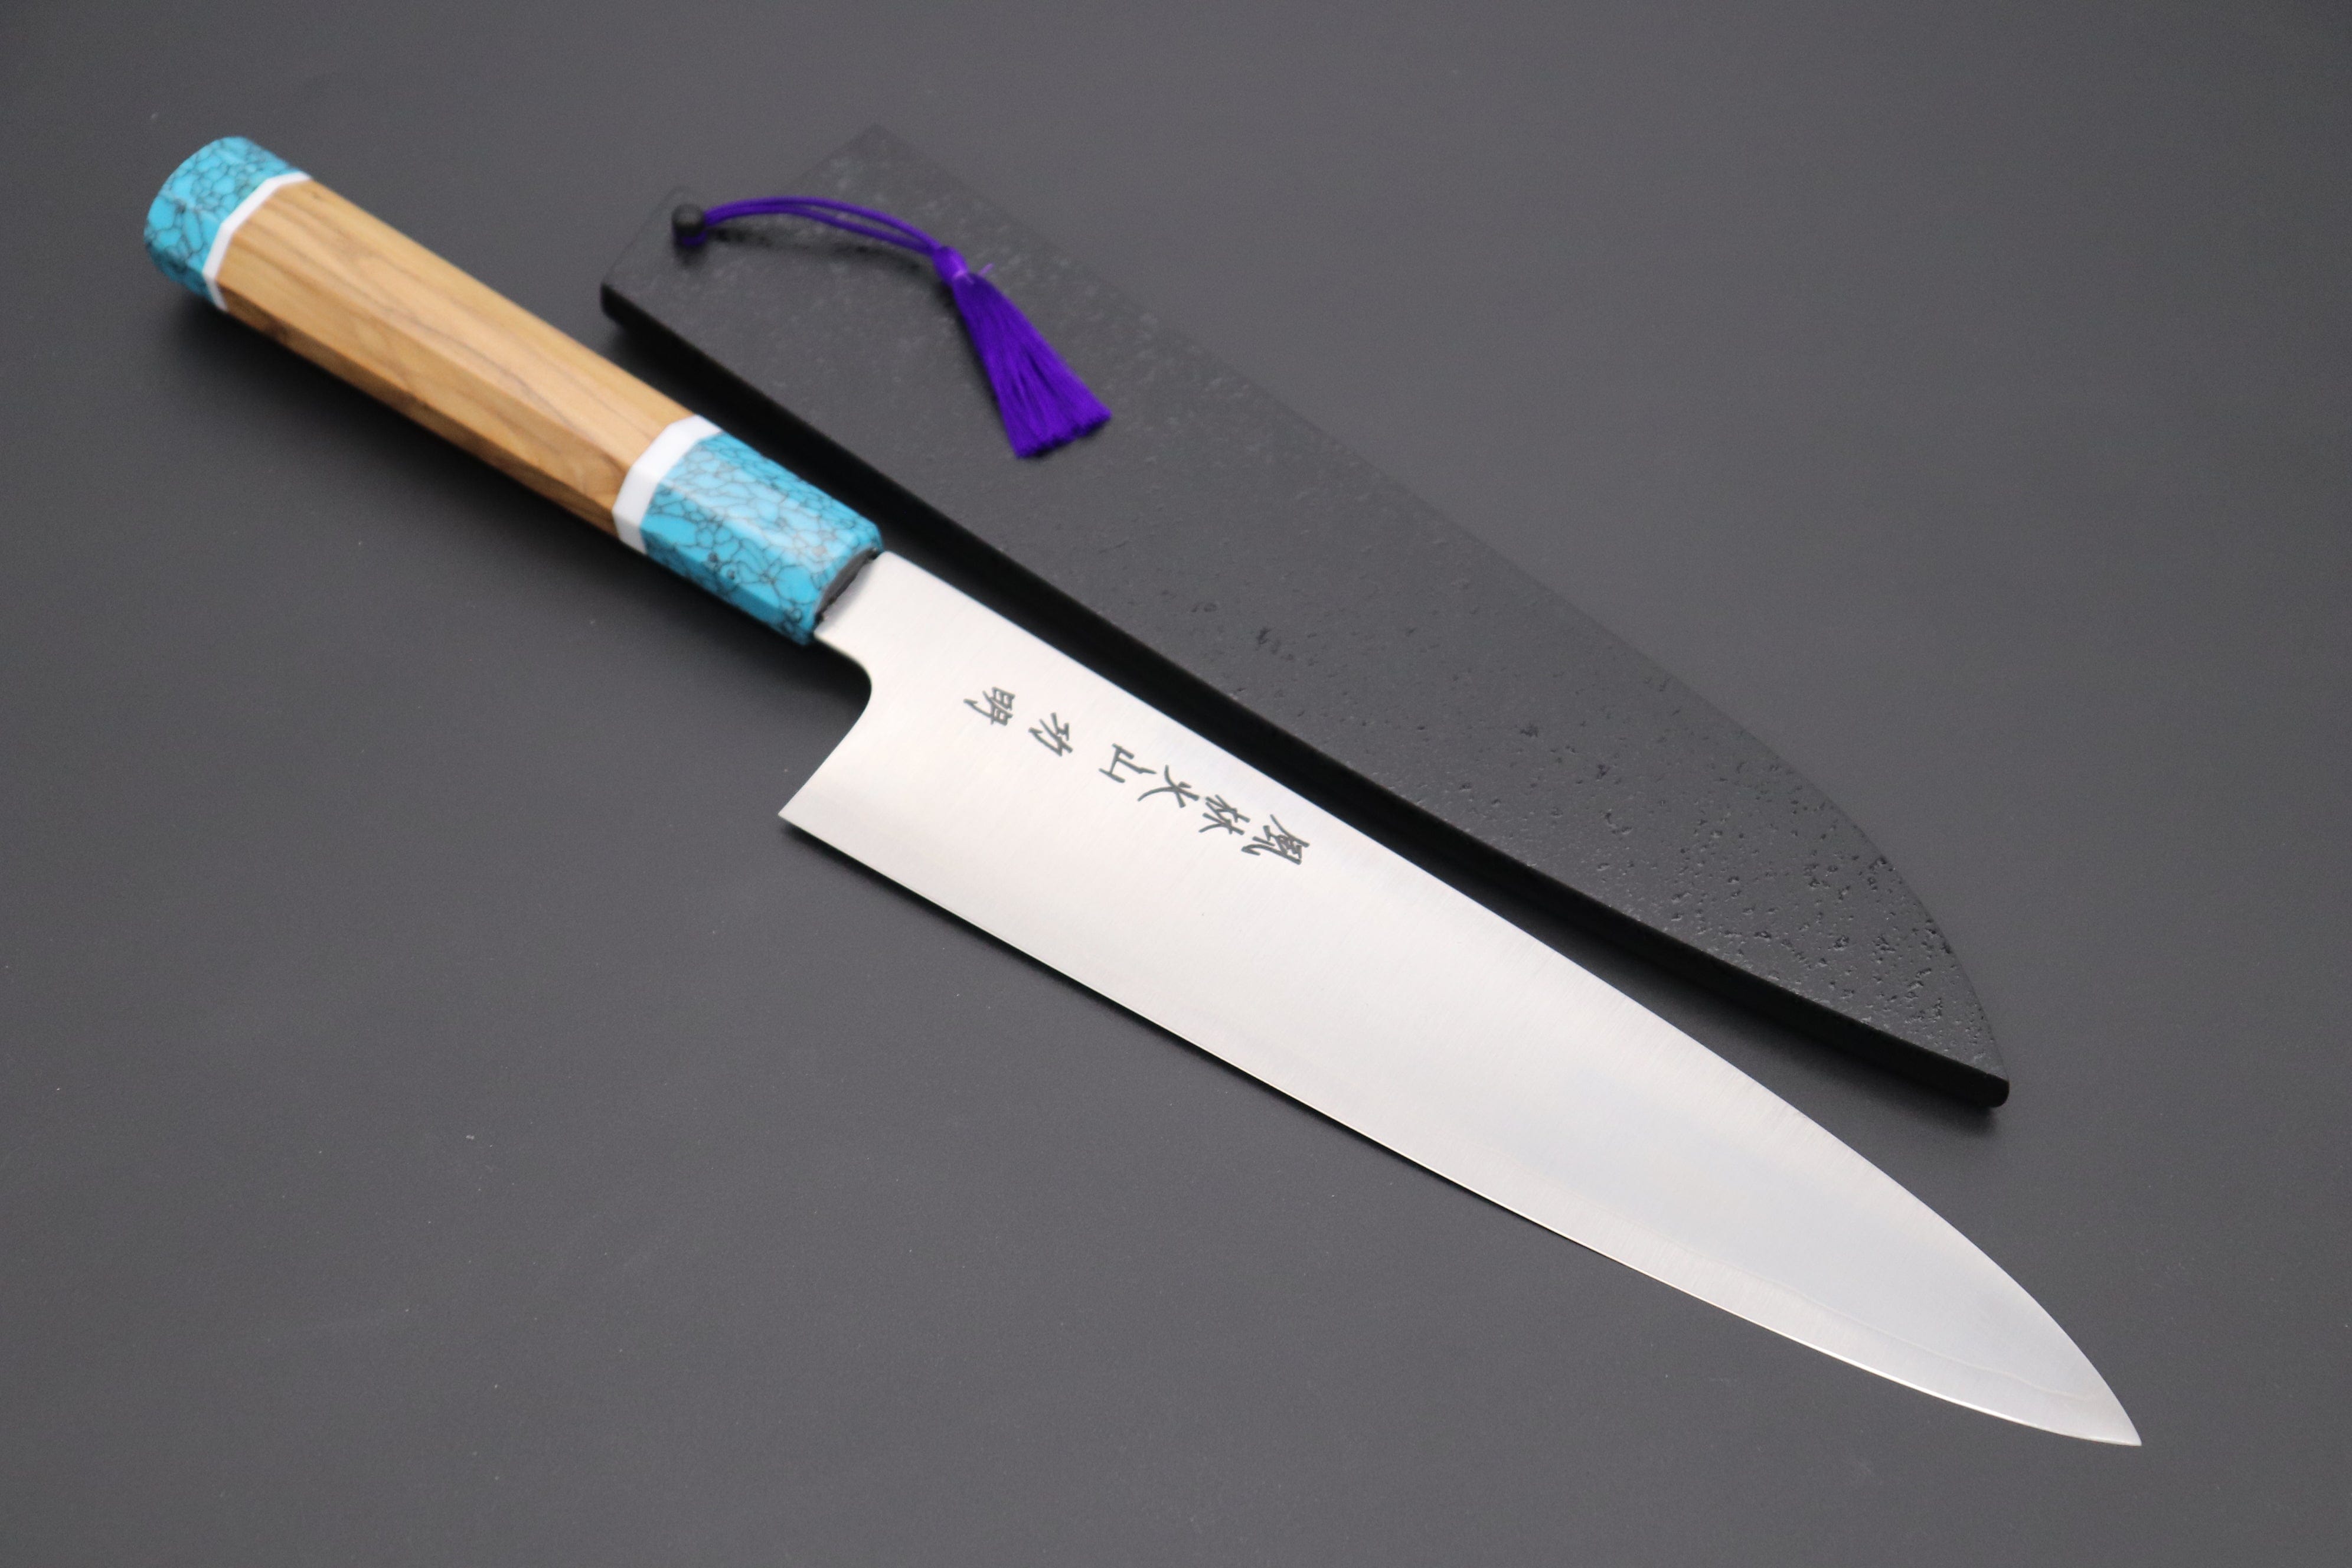 Knife set 4 KAI GYUTO SANTOKU hammered Stainless steel IMAYO Japan - Osaka  Tools